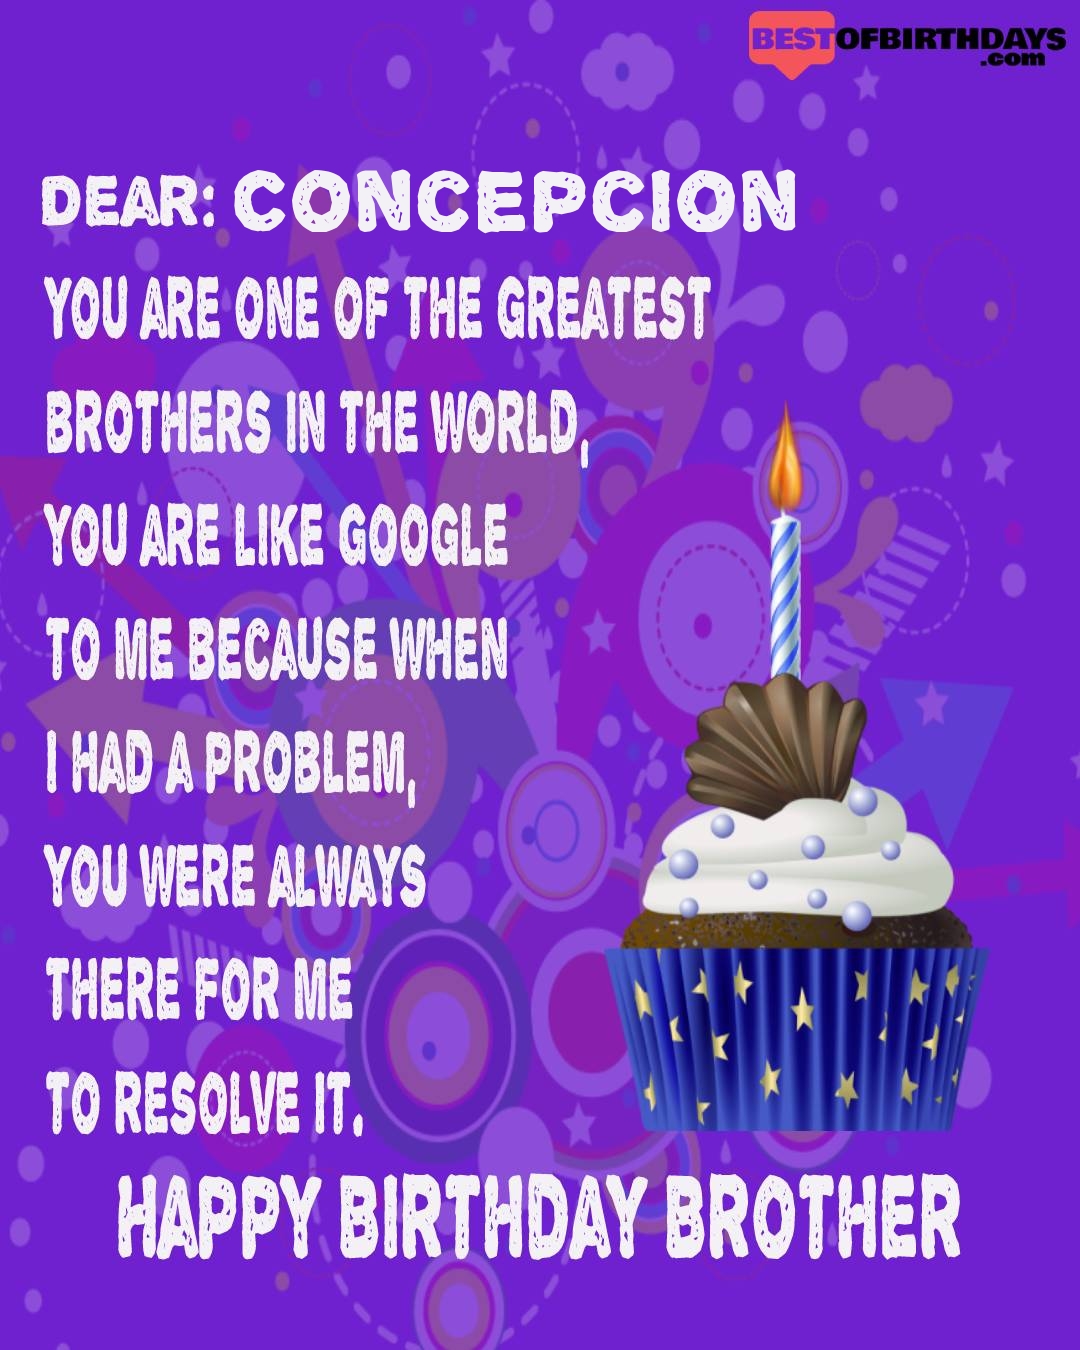 Happy birthday concepcion bhai brother bro